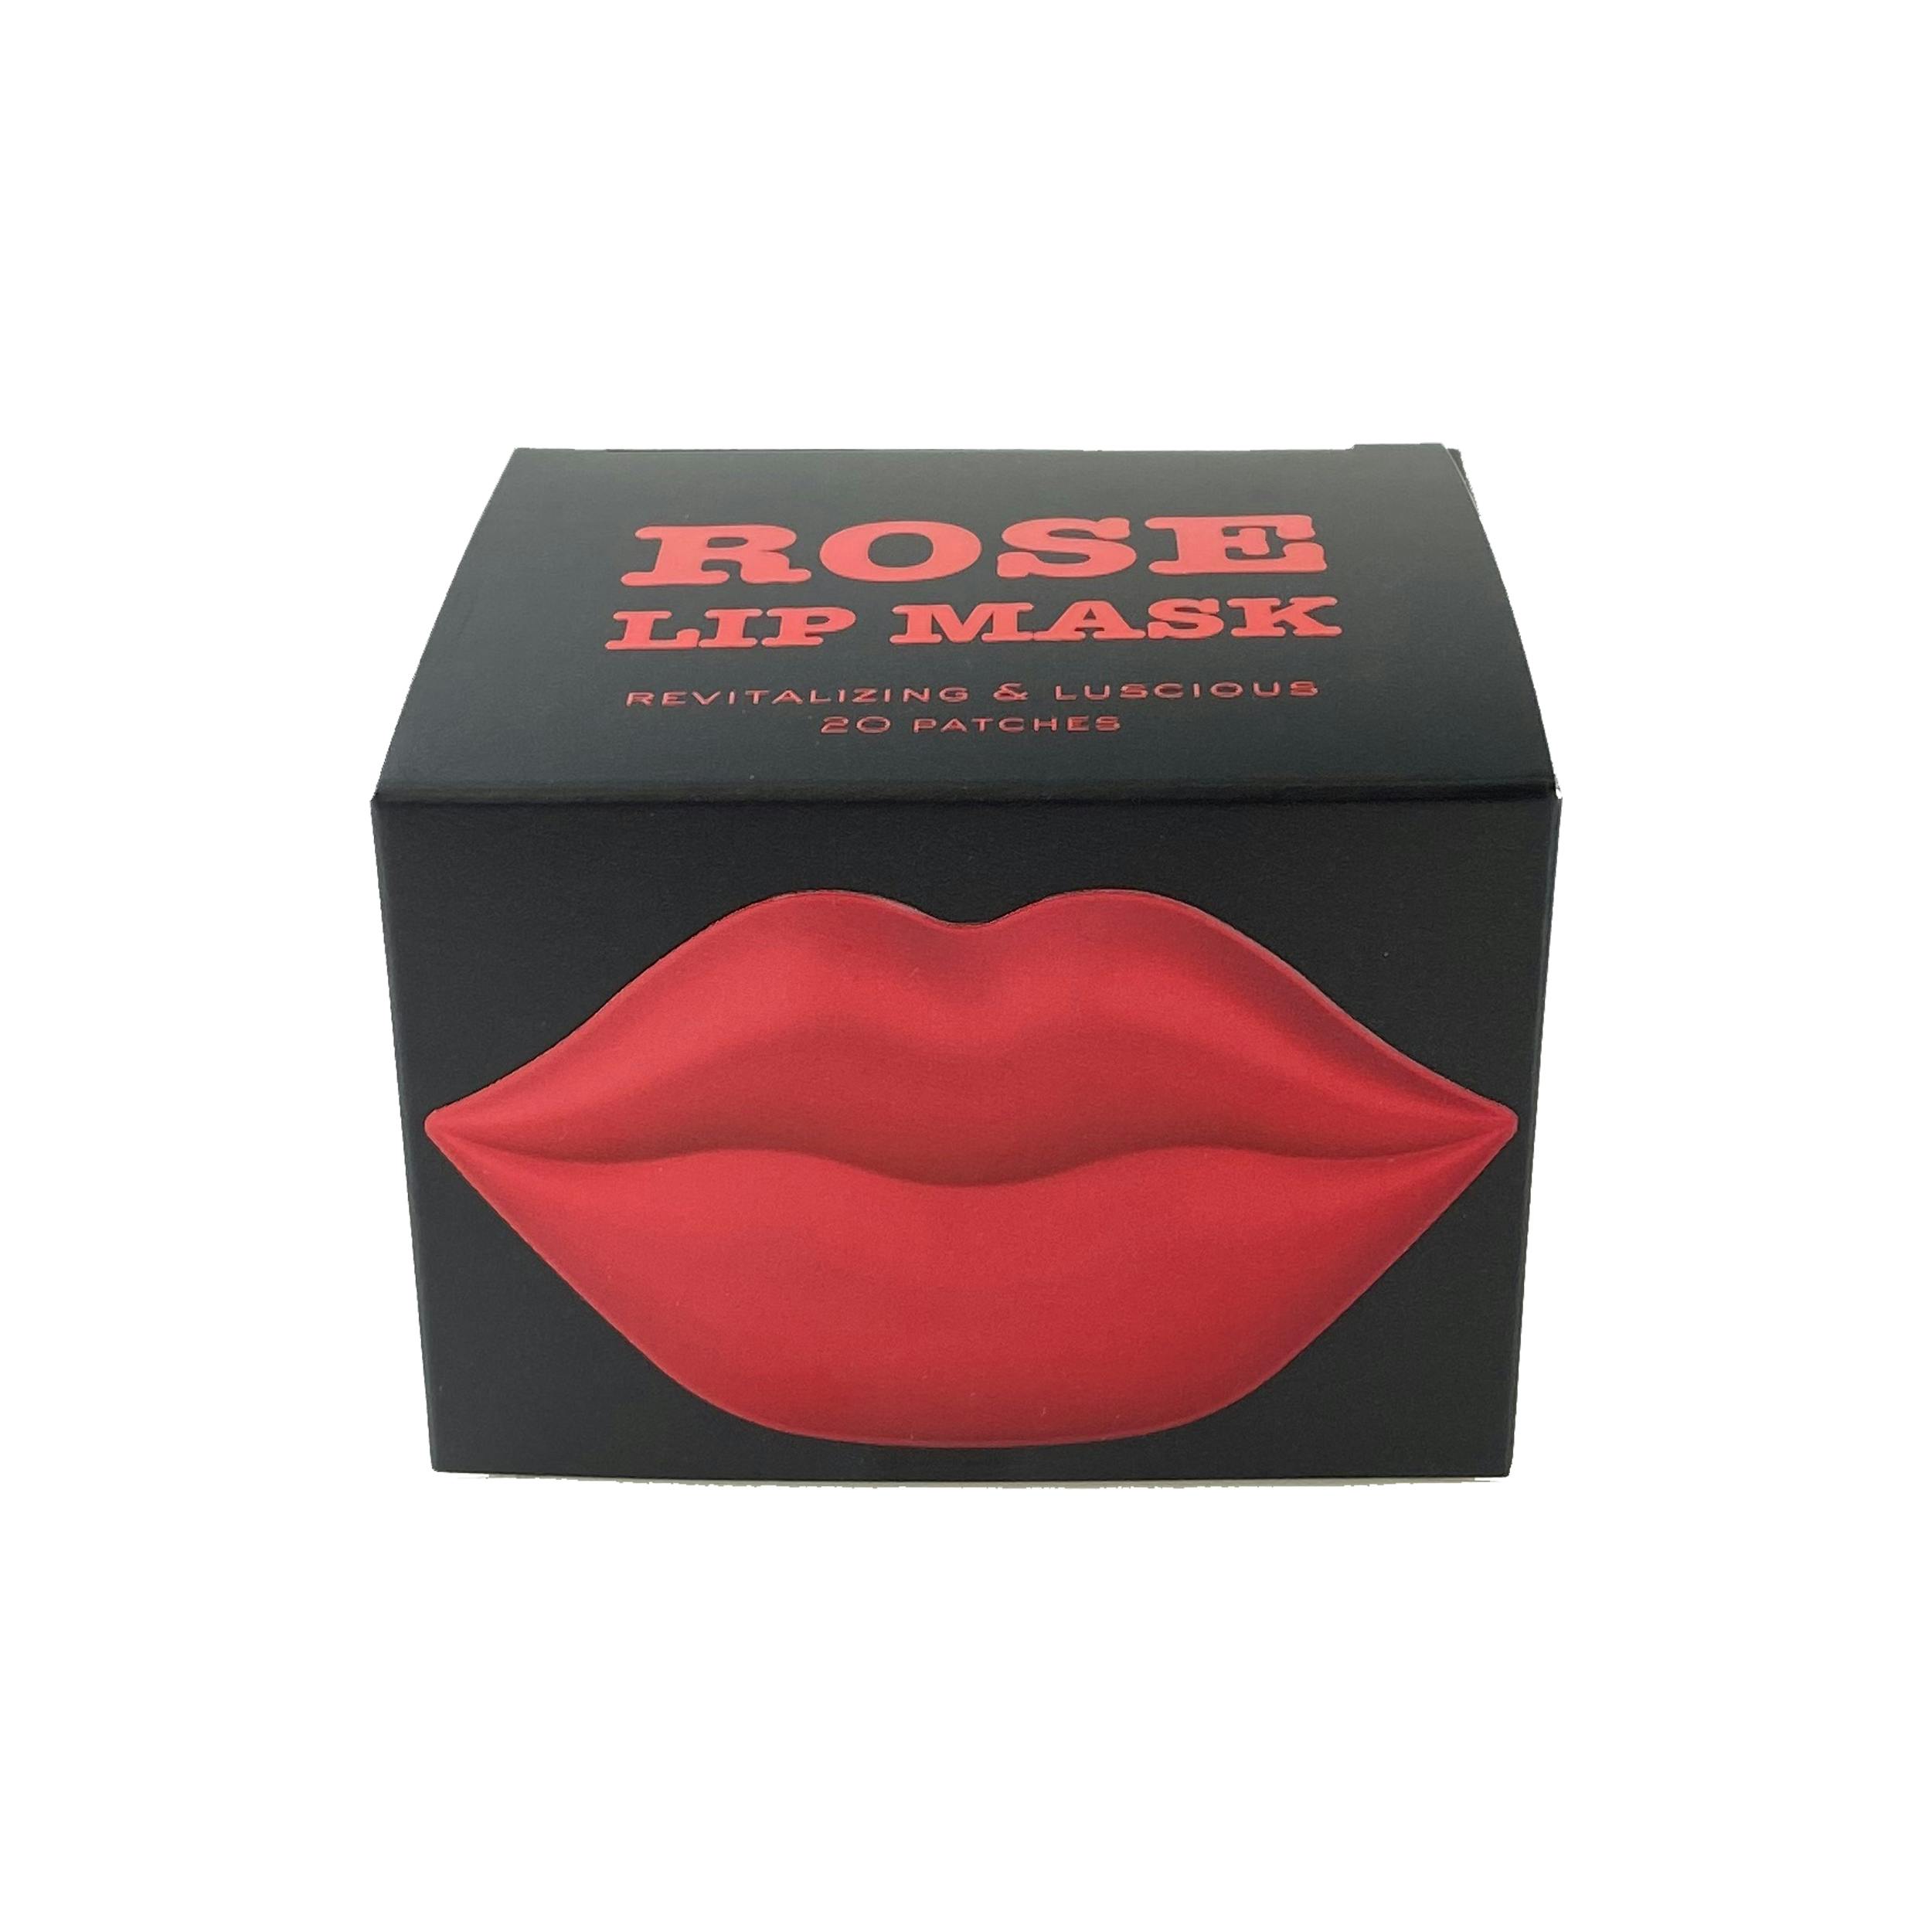 KOCOSTAR Lip Mask Romantic 20 stk - 154.95 kr